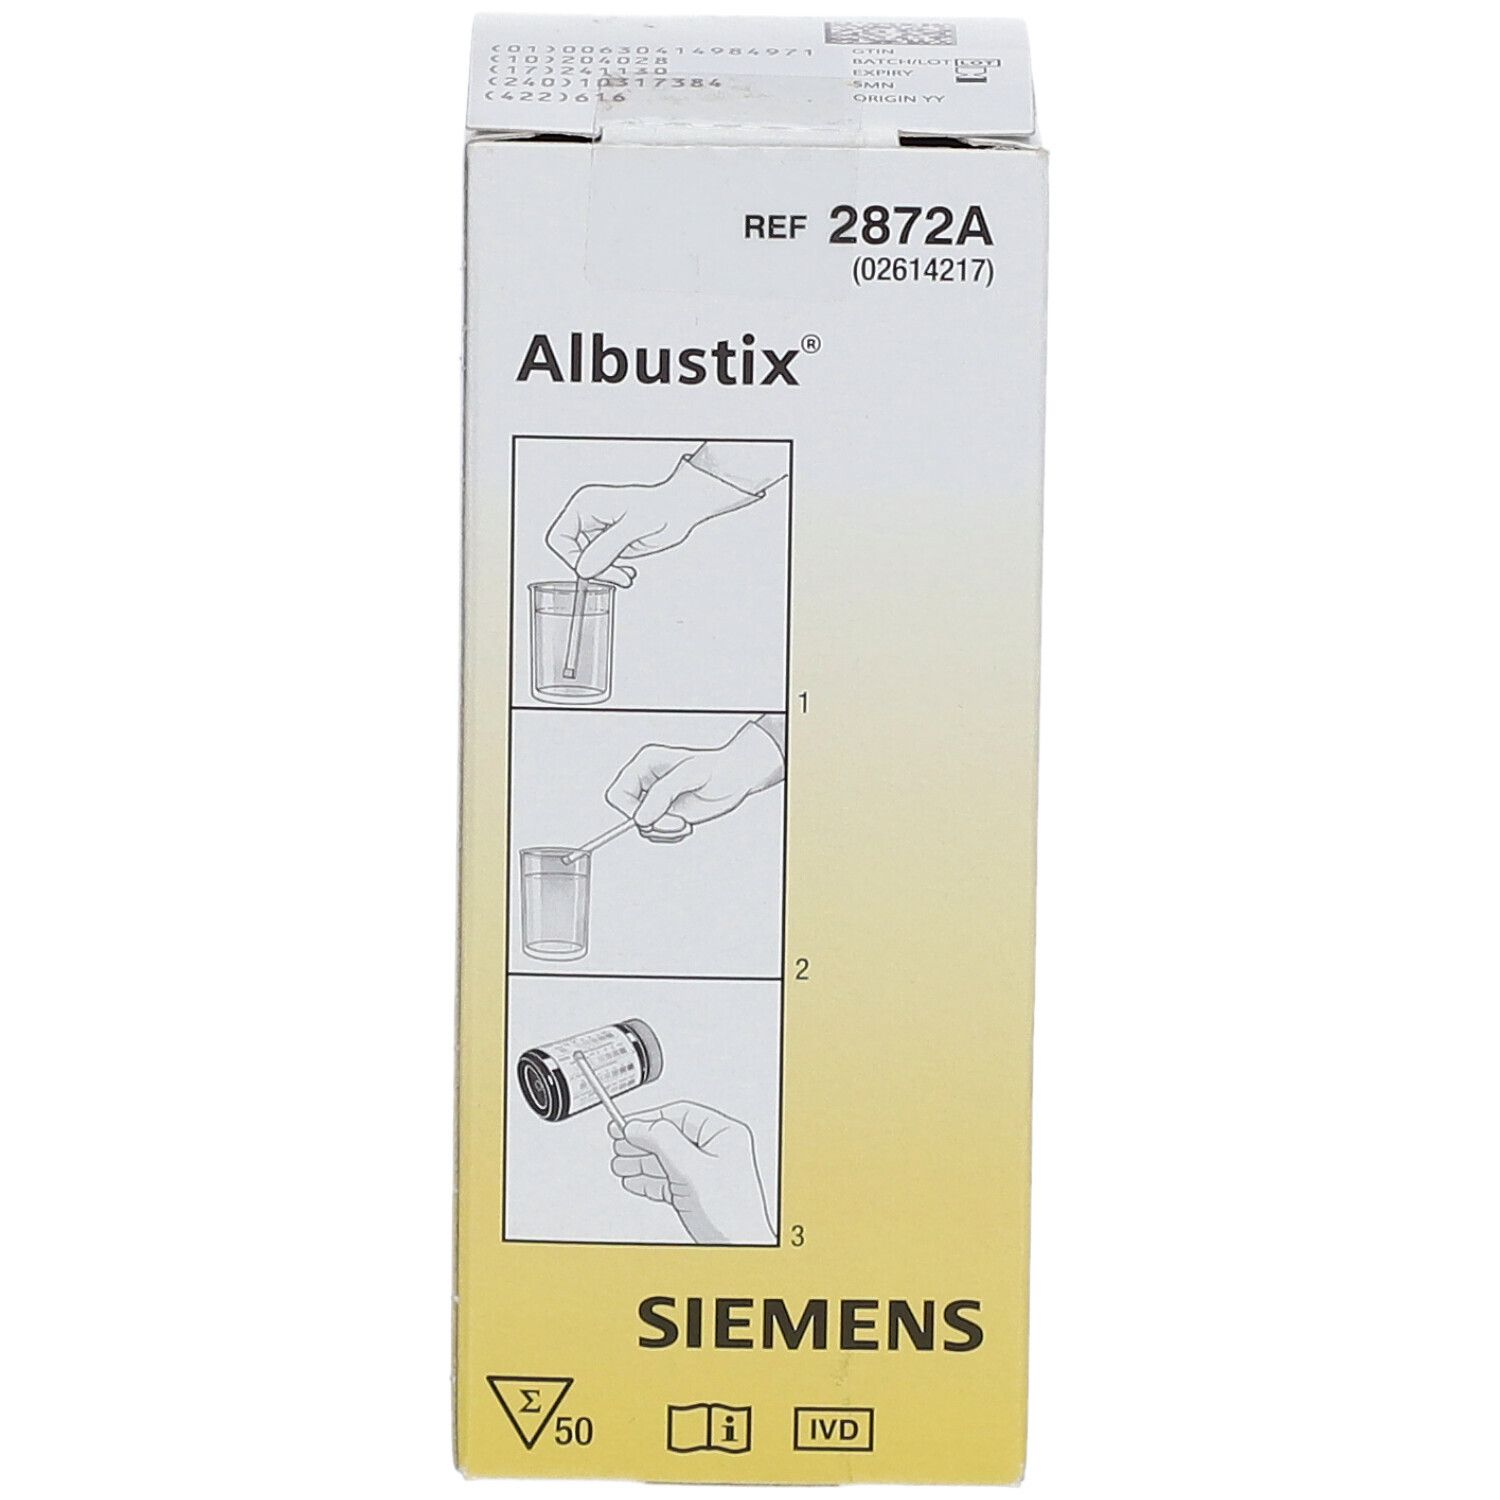 Siemens ALBUSTIX® Bandelettes réactives